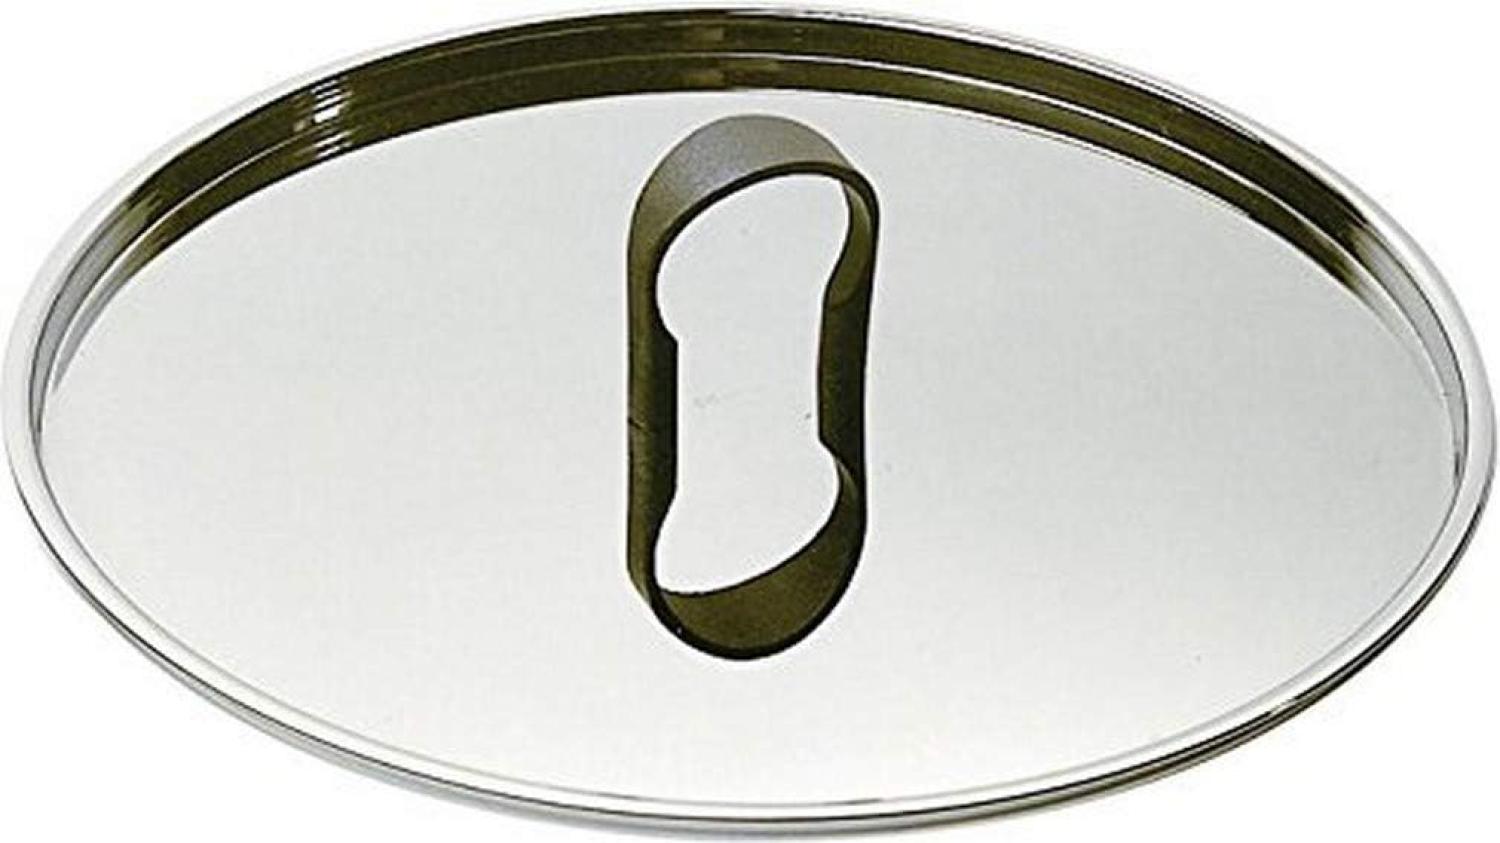 Alessi La Cintura di Orione Deckel, Stainless Steel, Silber, 28 x 28 x 29. 5 cm Bild 1